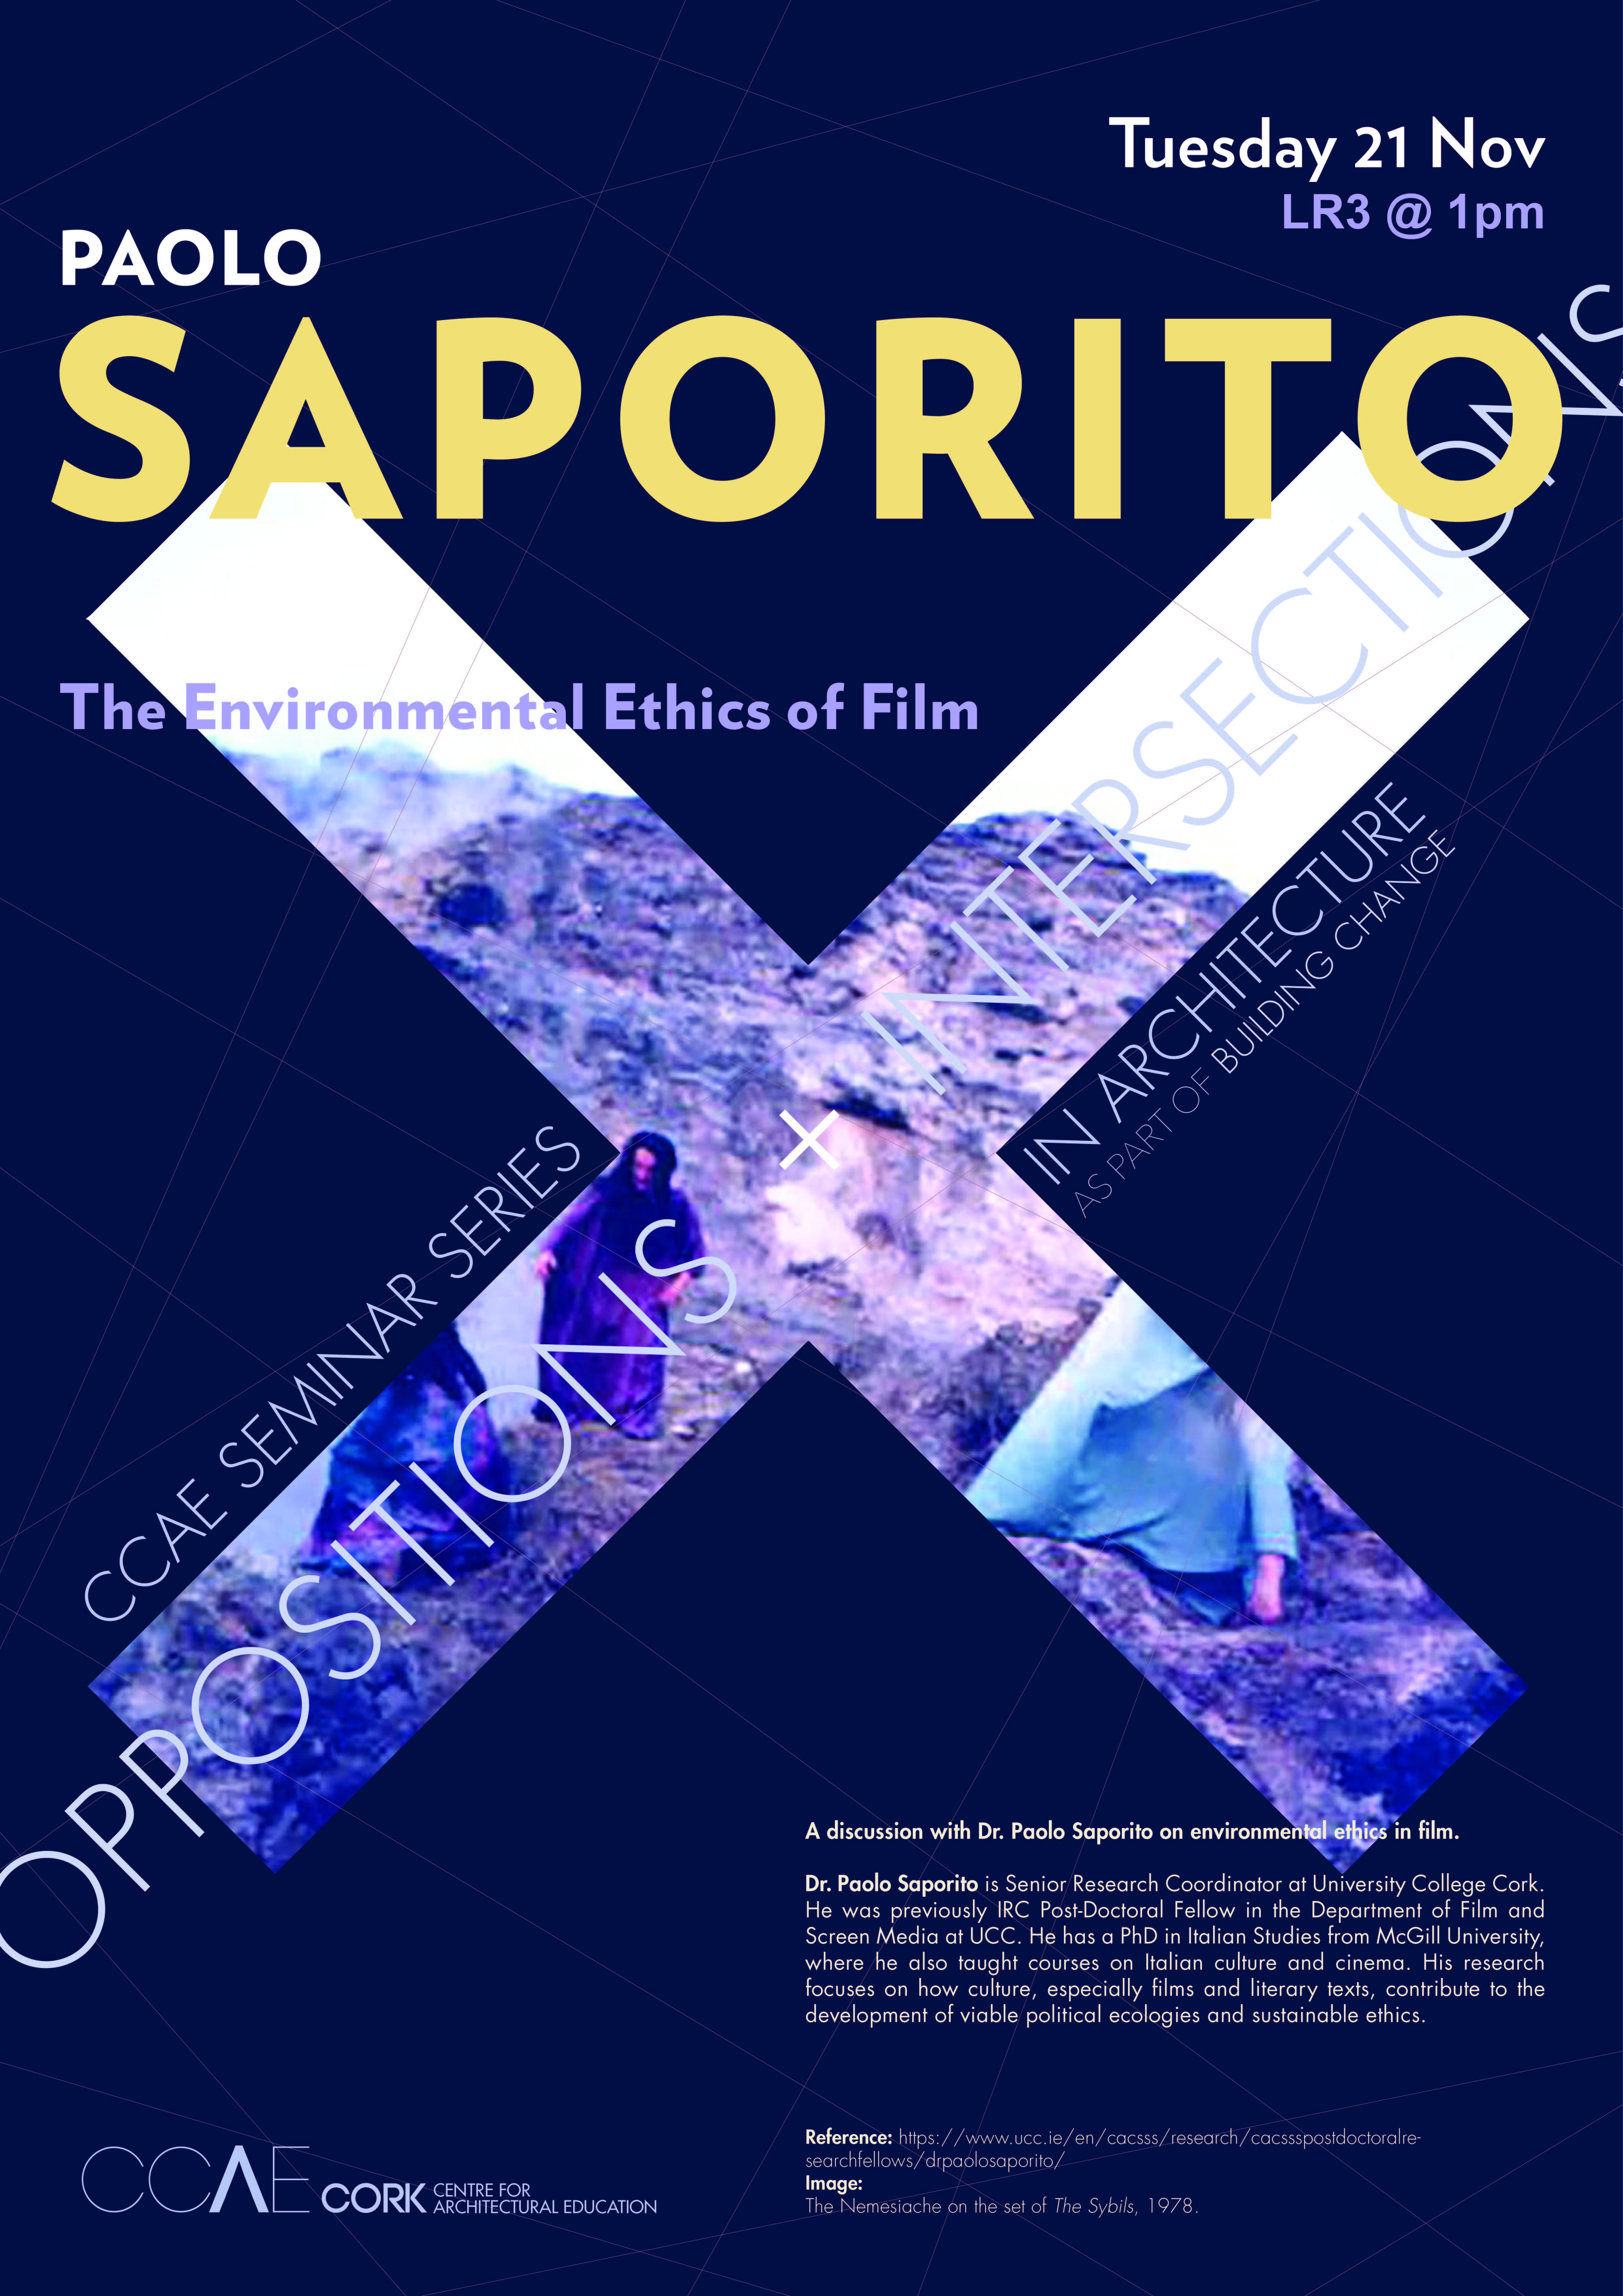 Paolo Saporito - The Environmental Ethics of Film